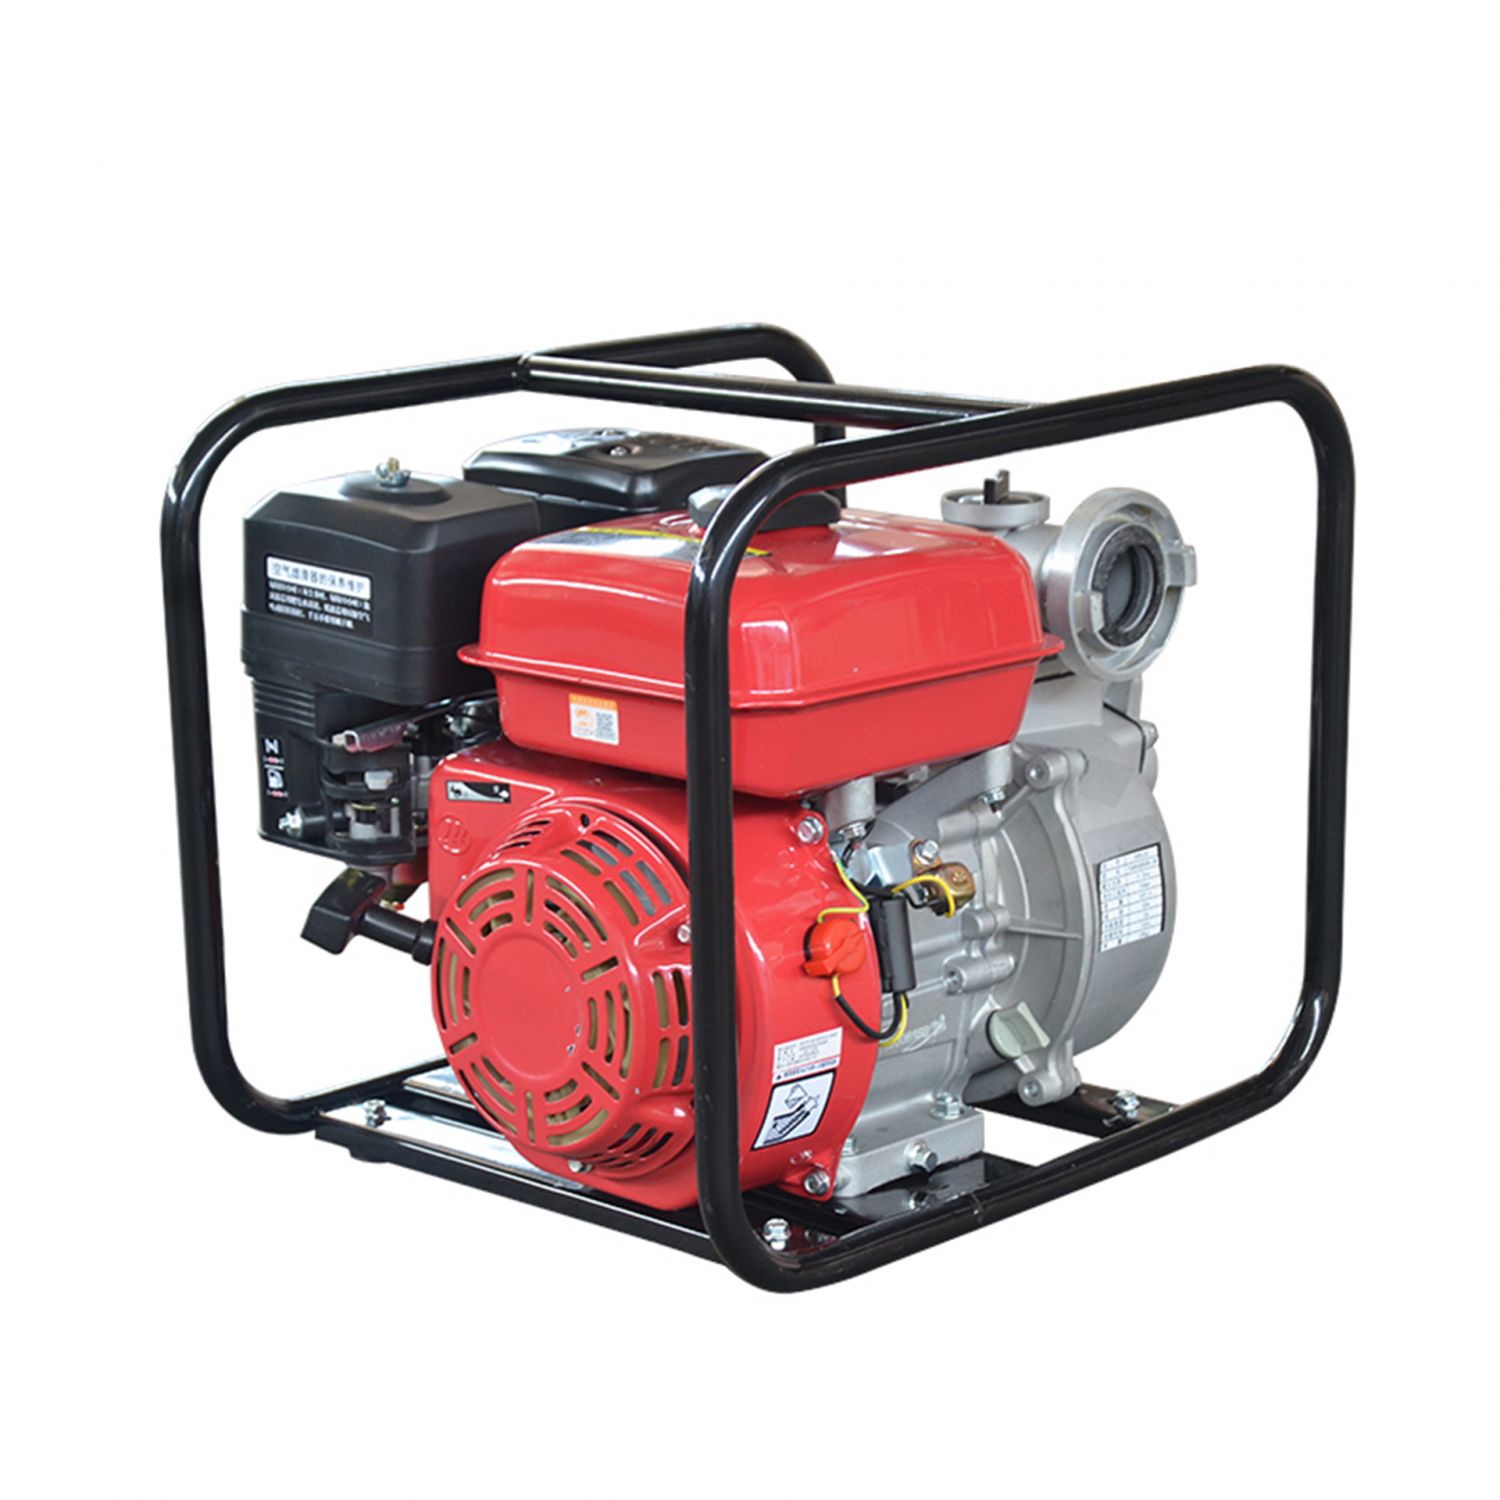 Portable diesel fire pump 5